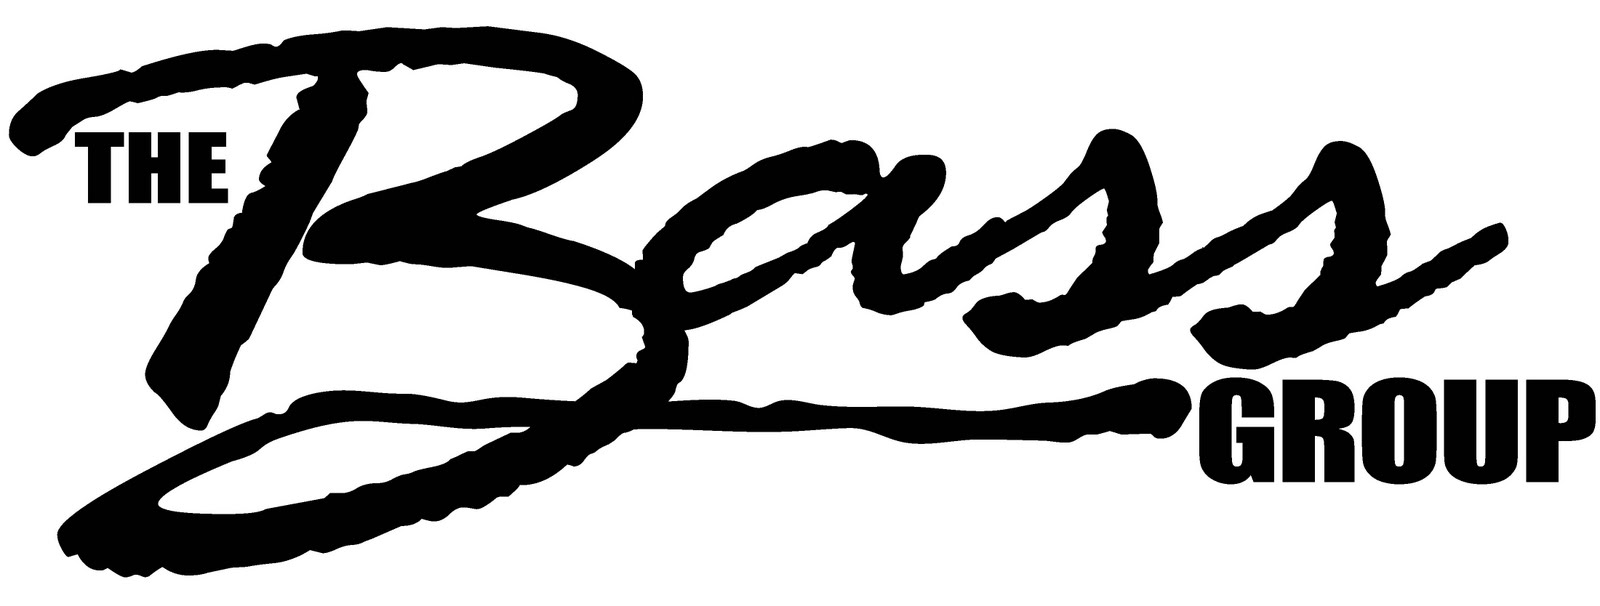 History of All Logos: All Bass Beer Logos